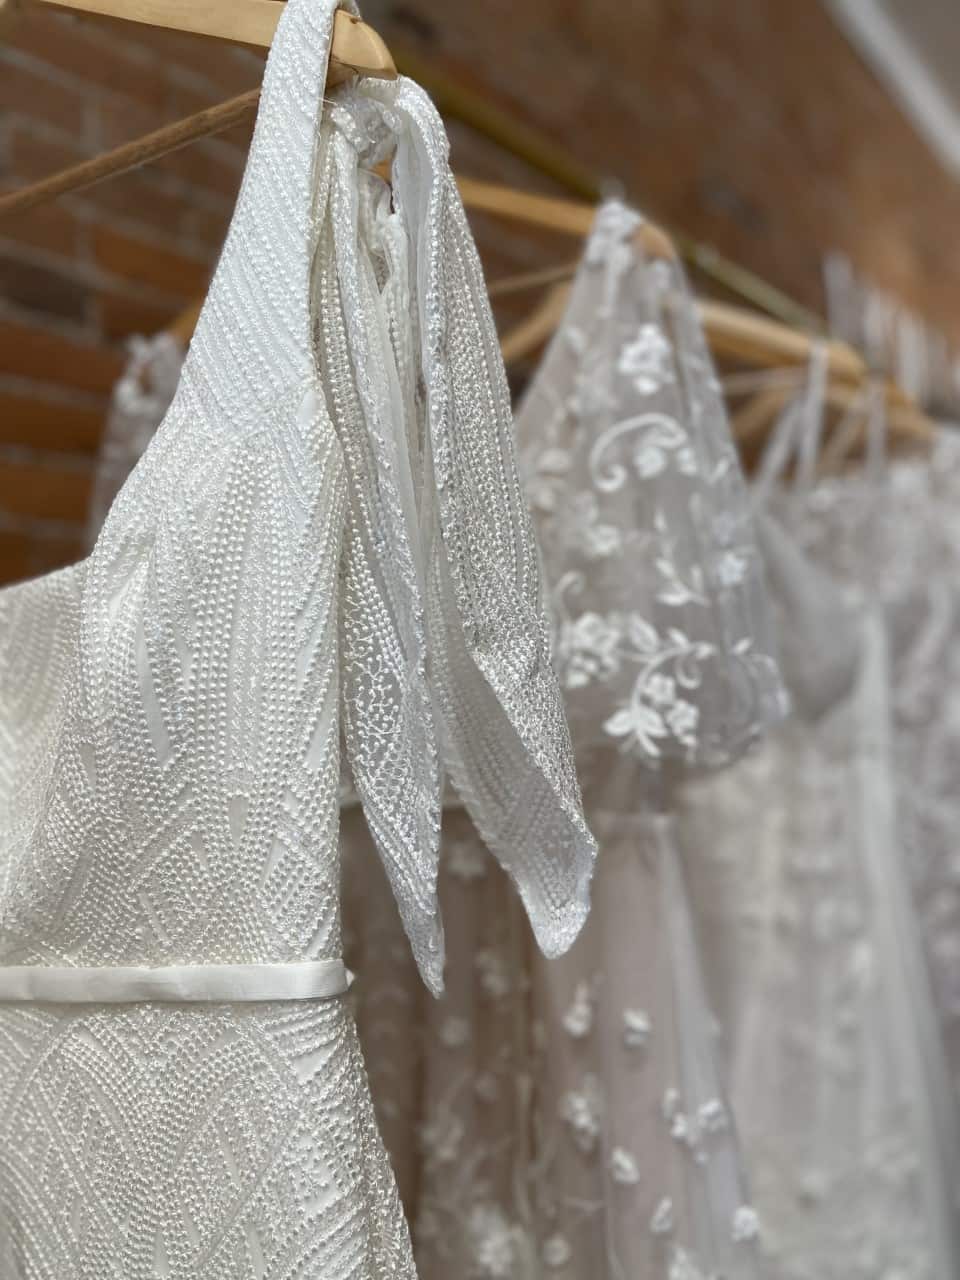 Dresses at Holland Bridal Shoppe in Pella Iowa